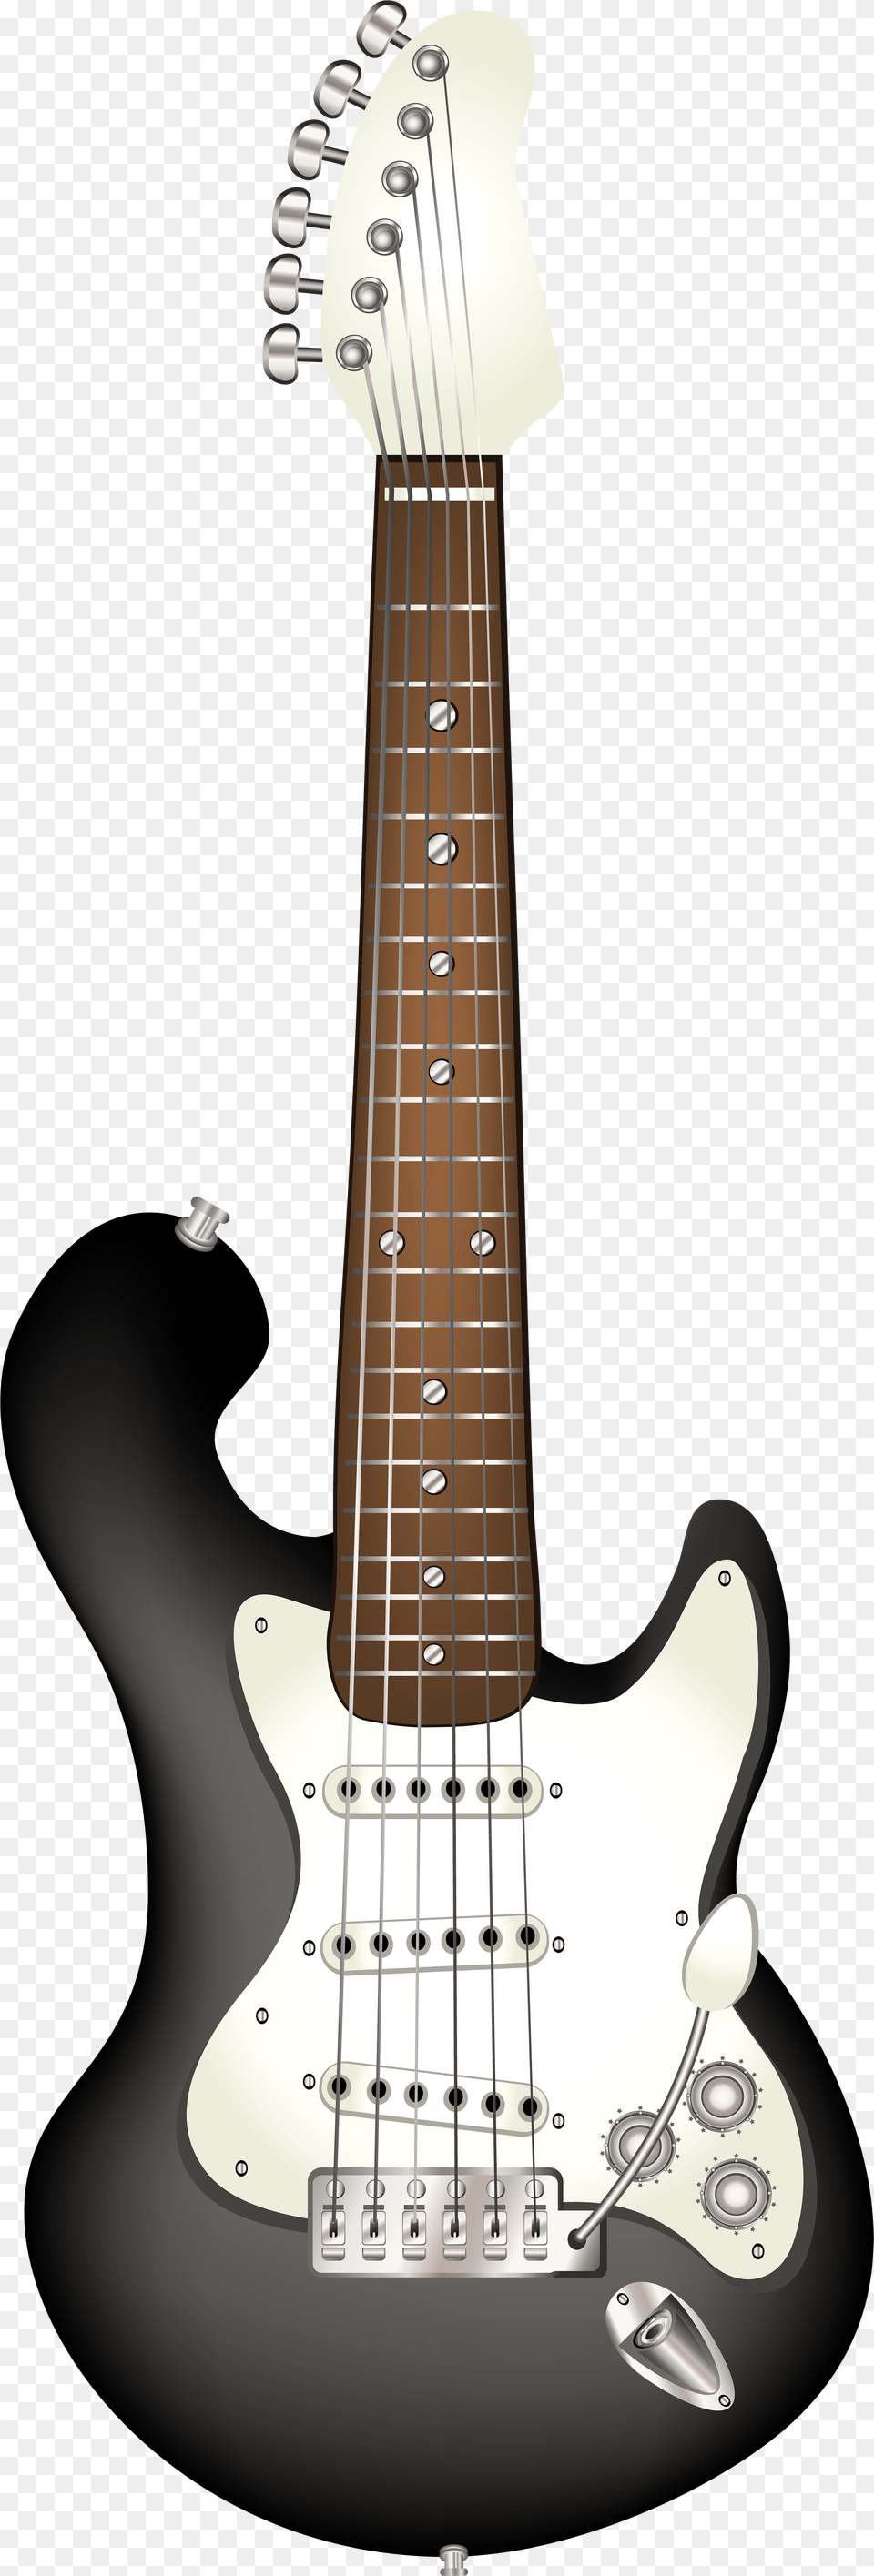 Guitar Bass Transparent Download Image Clipart Guitar, Bass Guitar, Musical Instrument Free Png